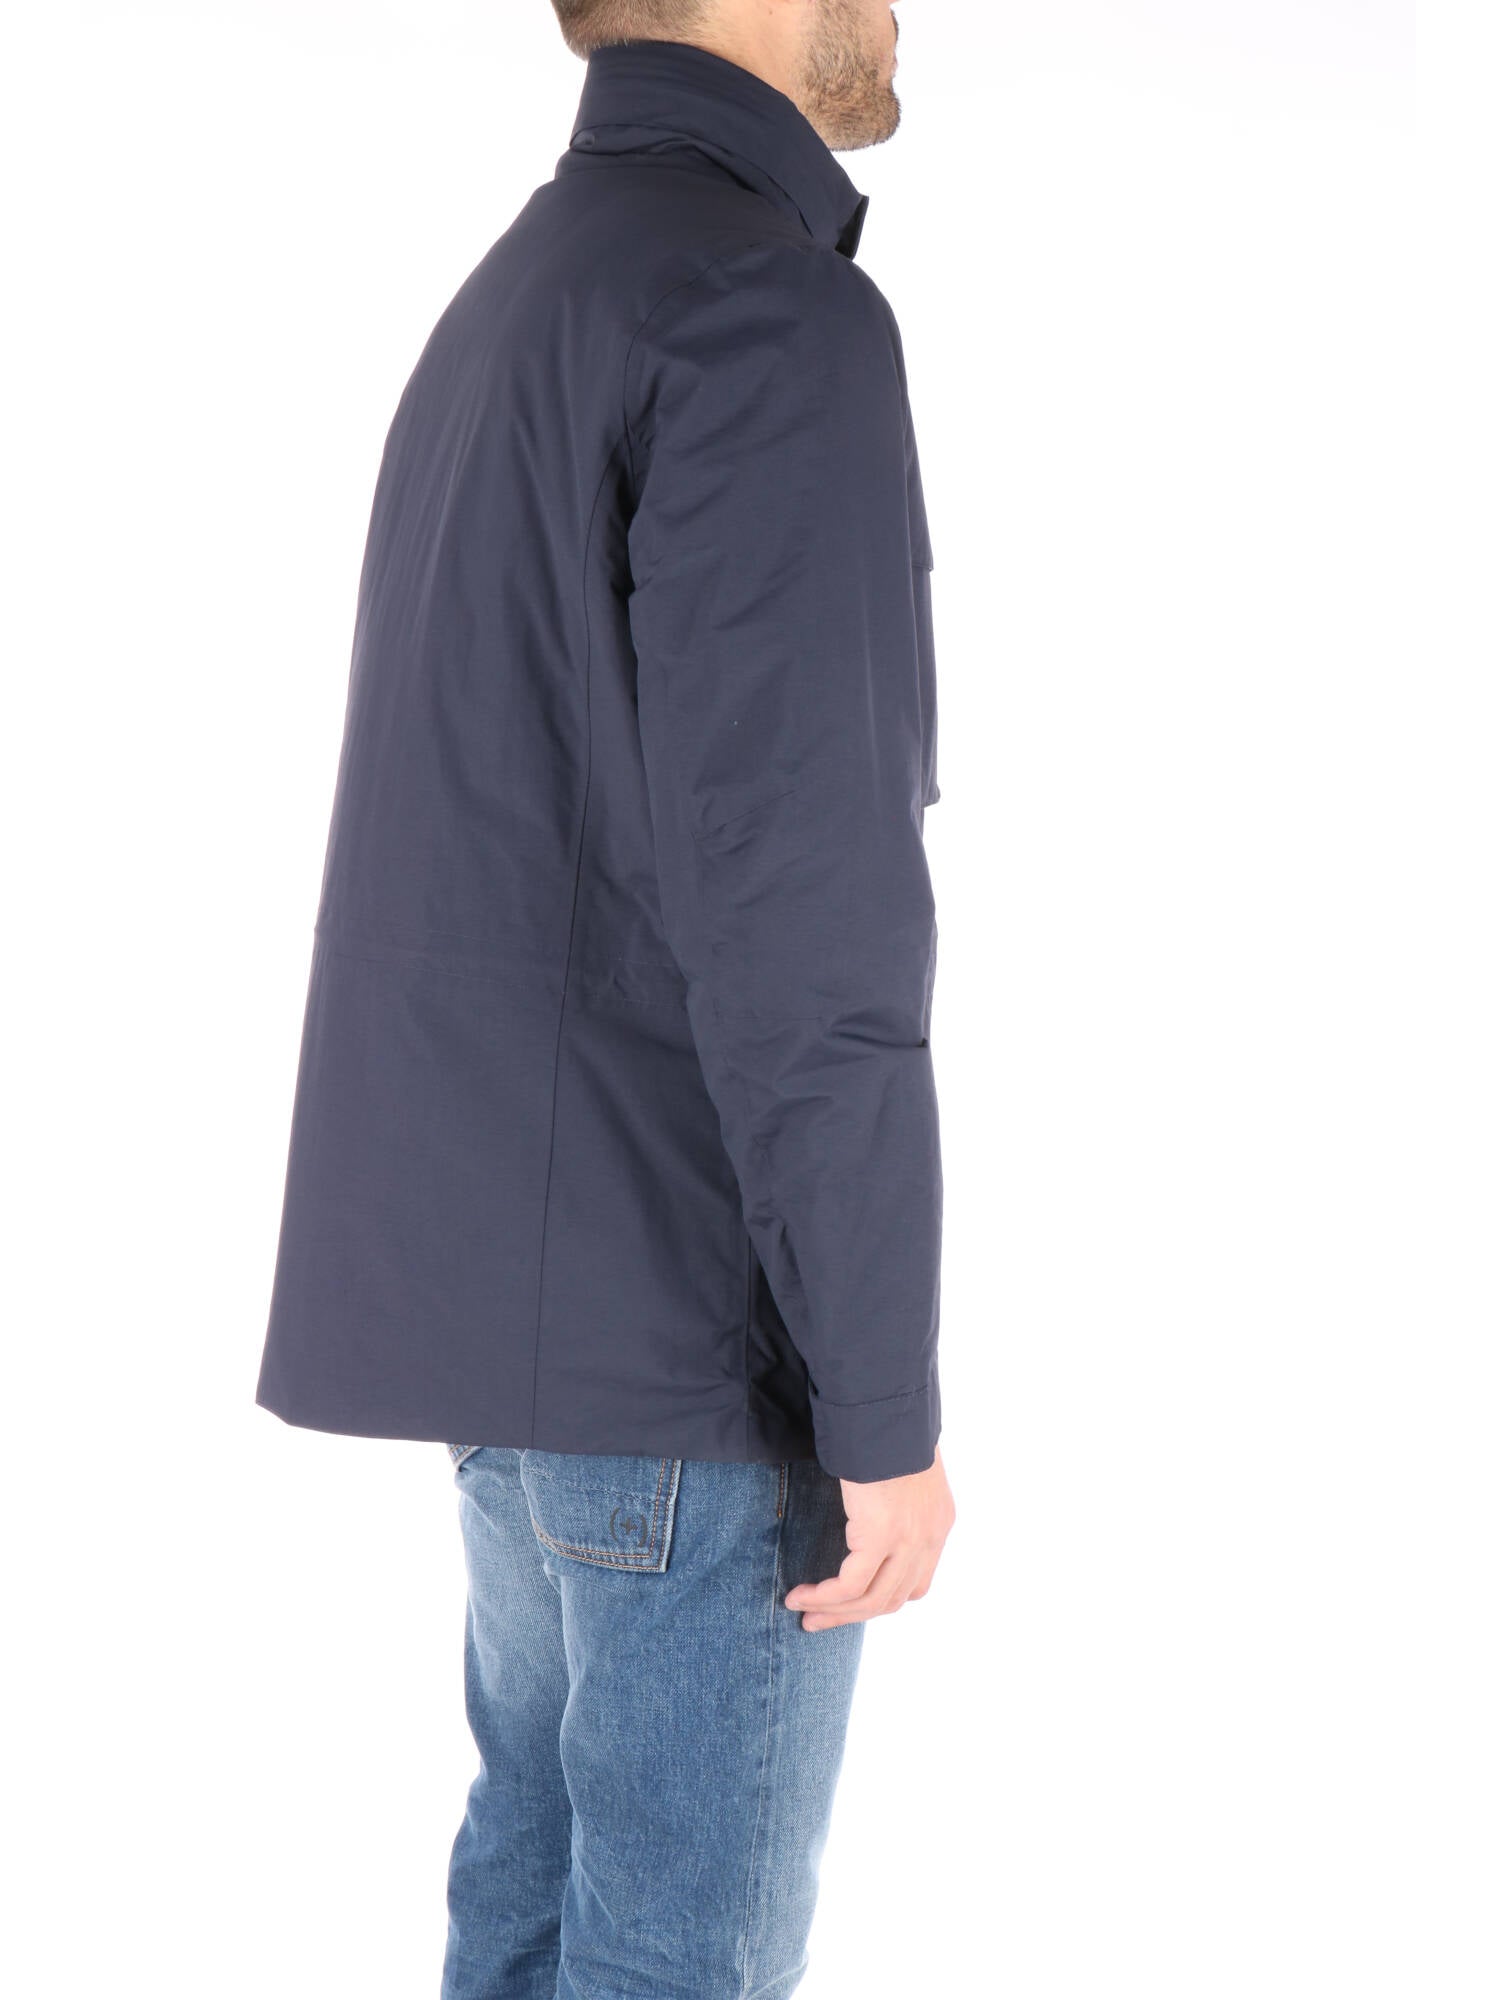 Kway giacca corta in nylon ottoman